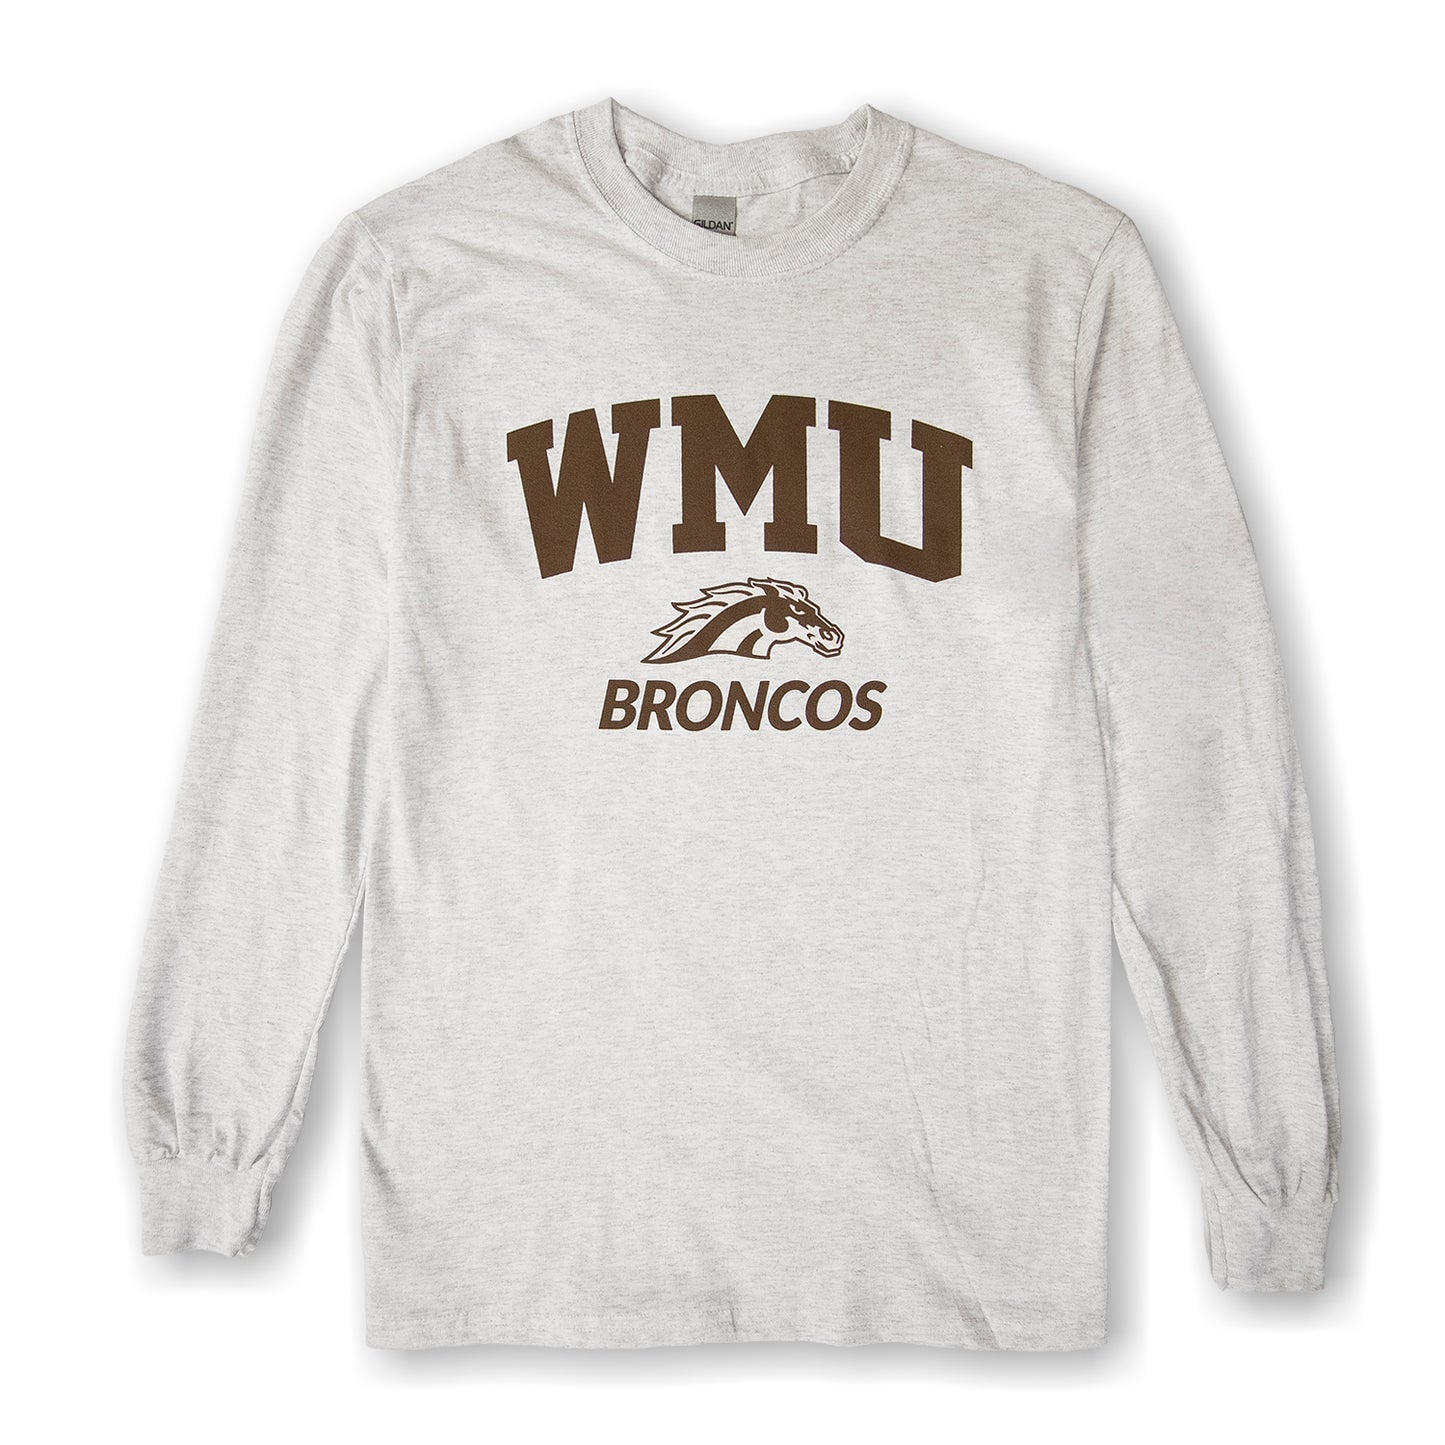 WMU Broncos Long Sleeve Tee